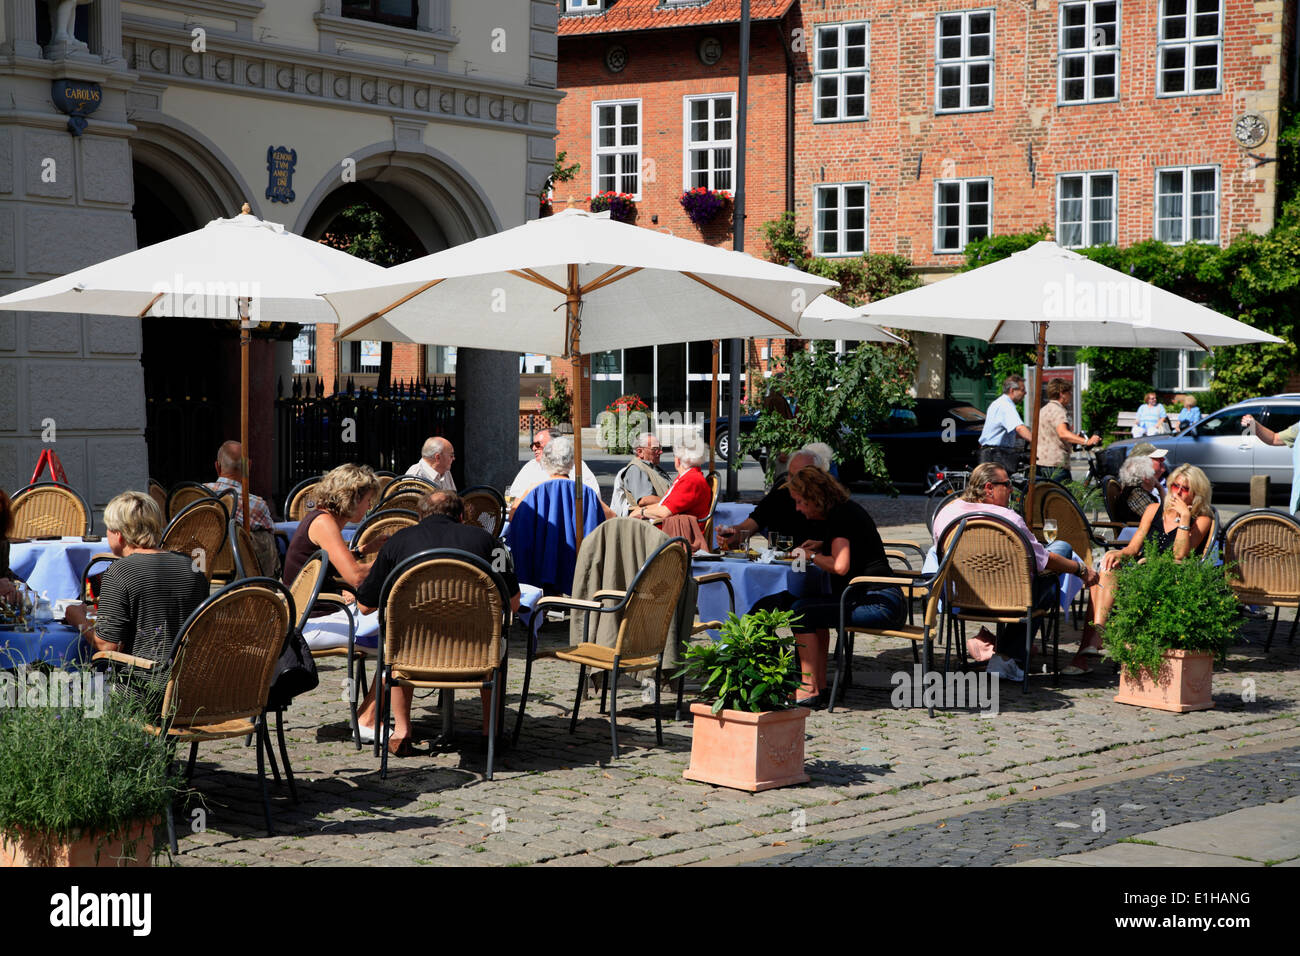 Restaurant and cafe at market square,  Lueneburg, Lüneburg, Lower Saxony, Germany, Europe Stock Photo